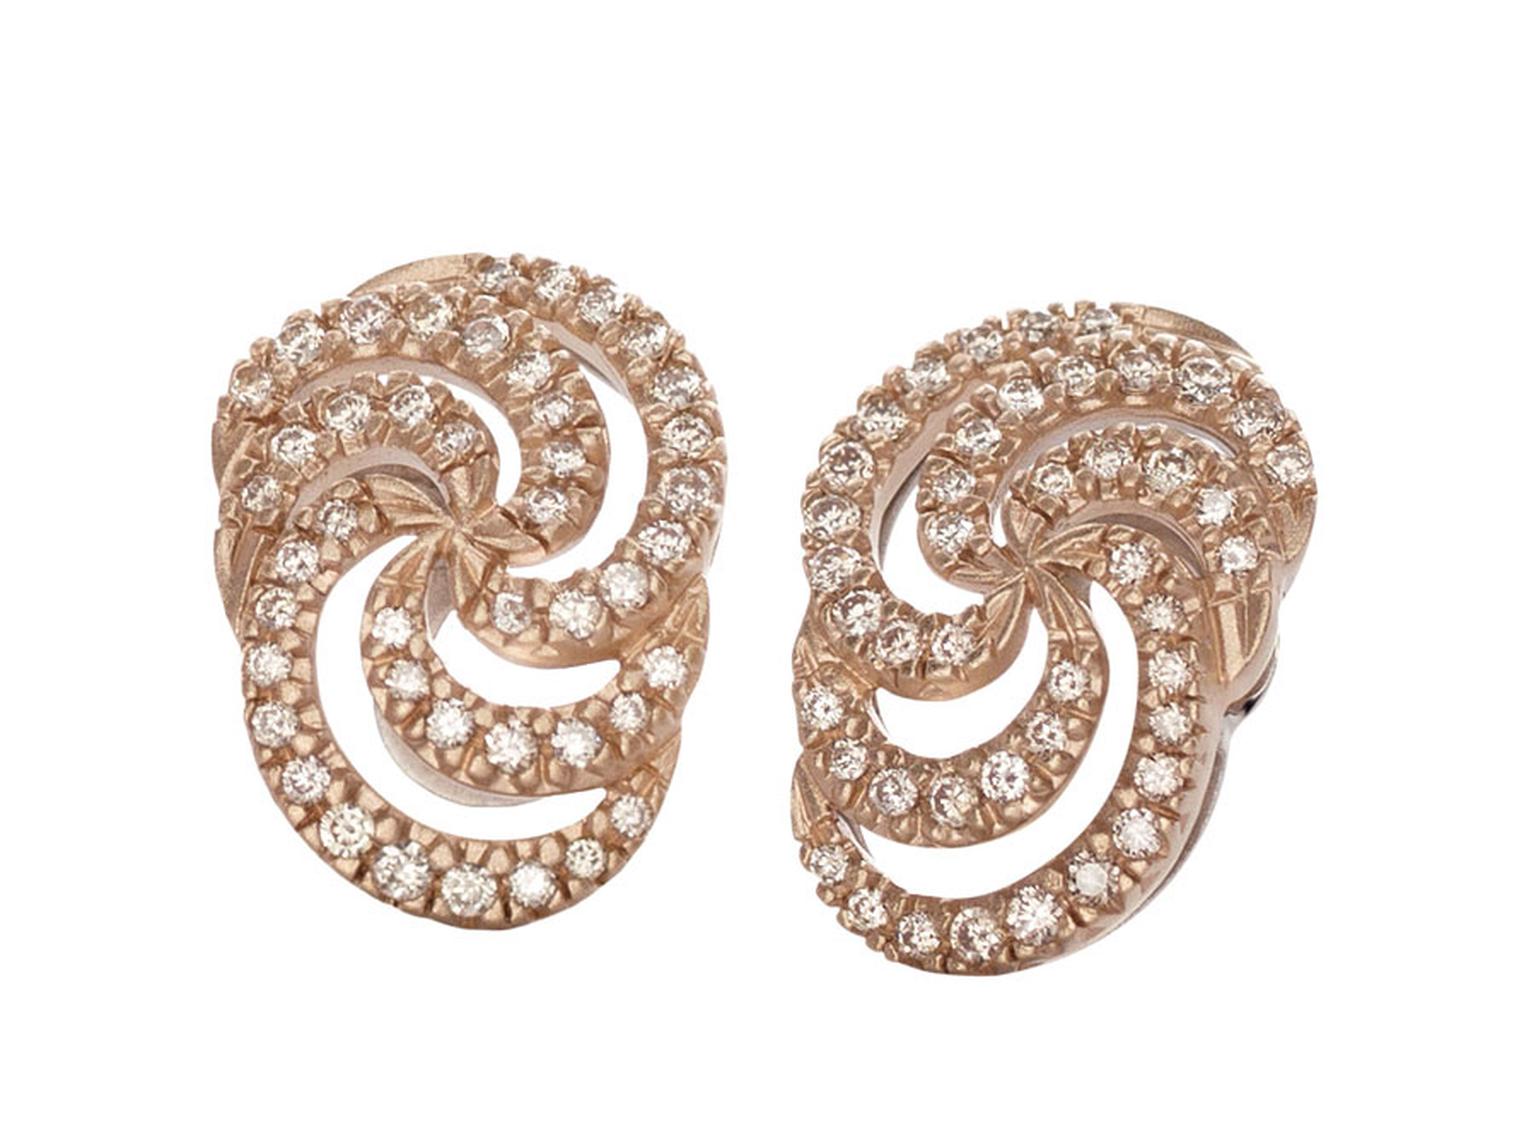 H-Stern-Earrings-in-rose-gold-with-diamonds-2.jpg